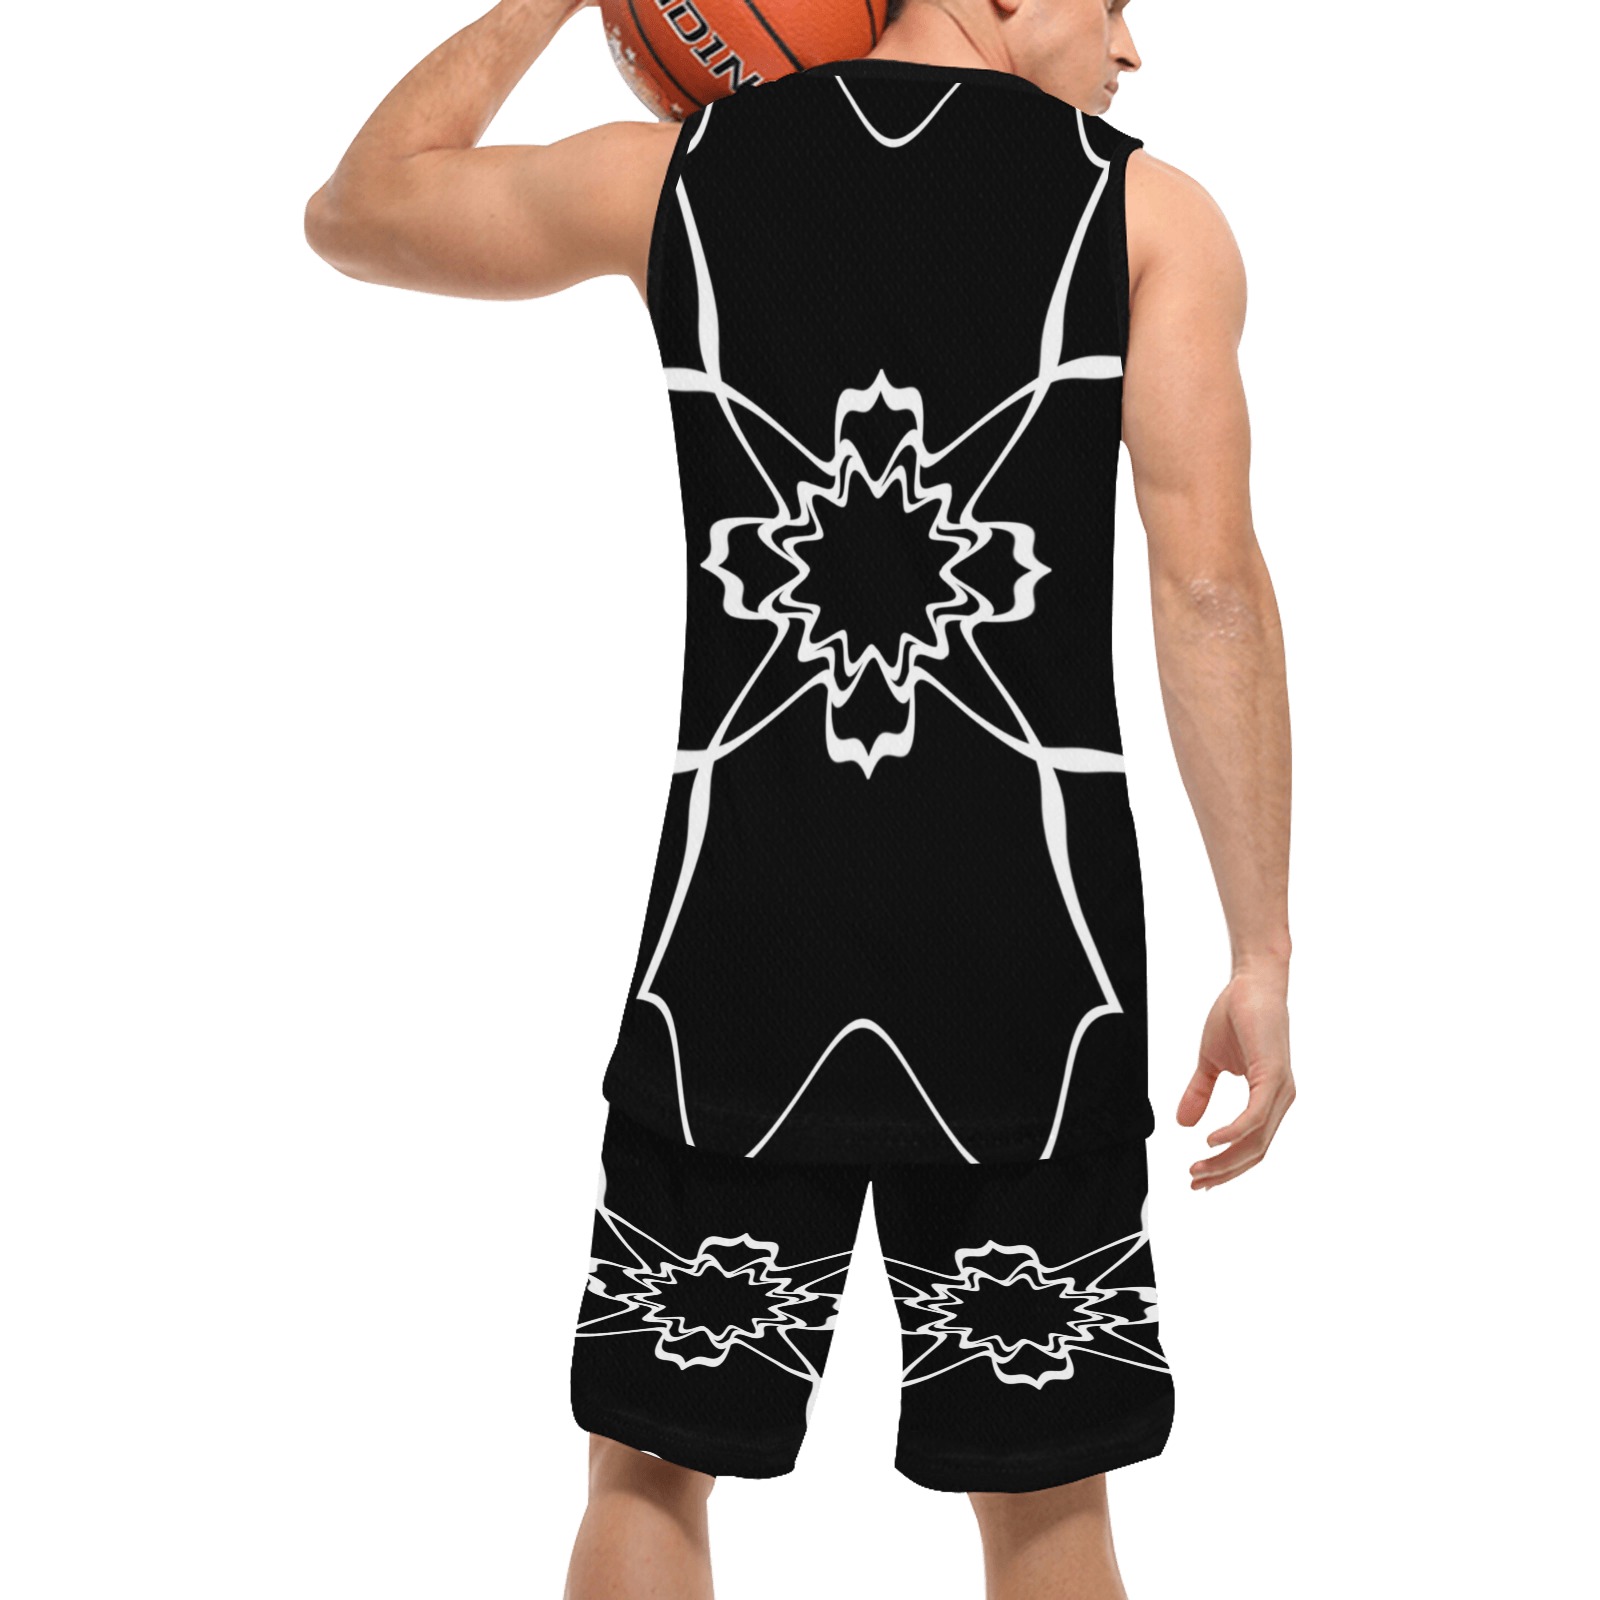 White Interlocking Triangles2 Starred black Basketball Uniform with Pocket